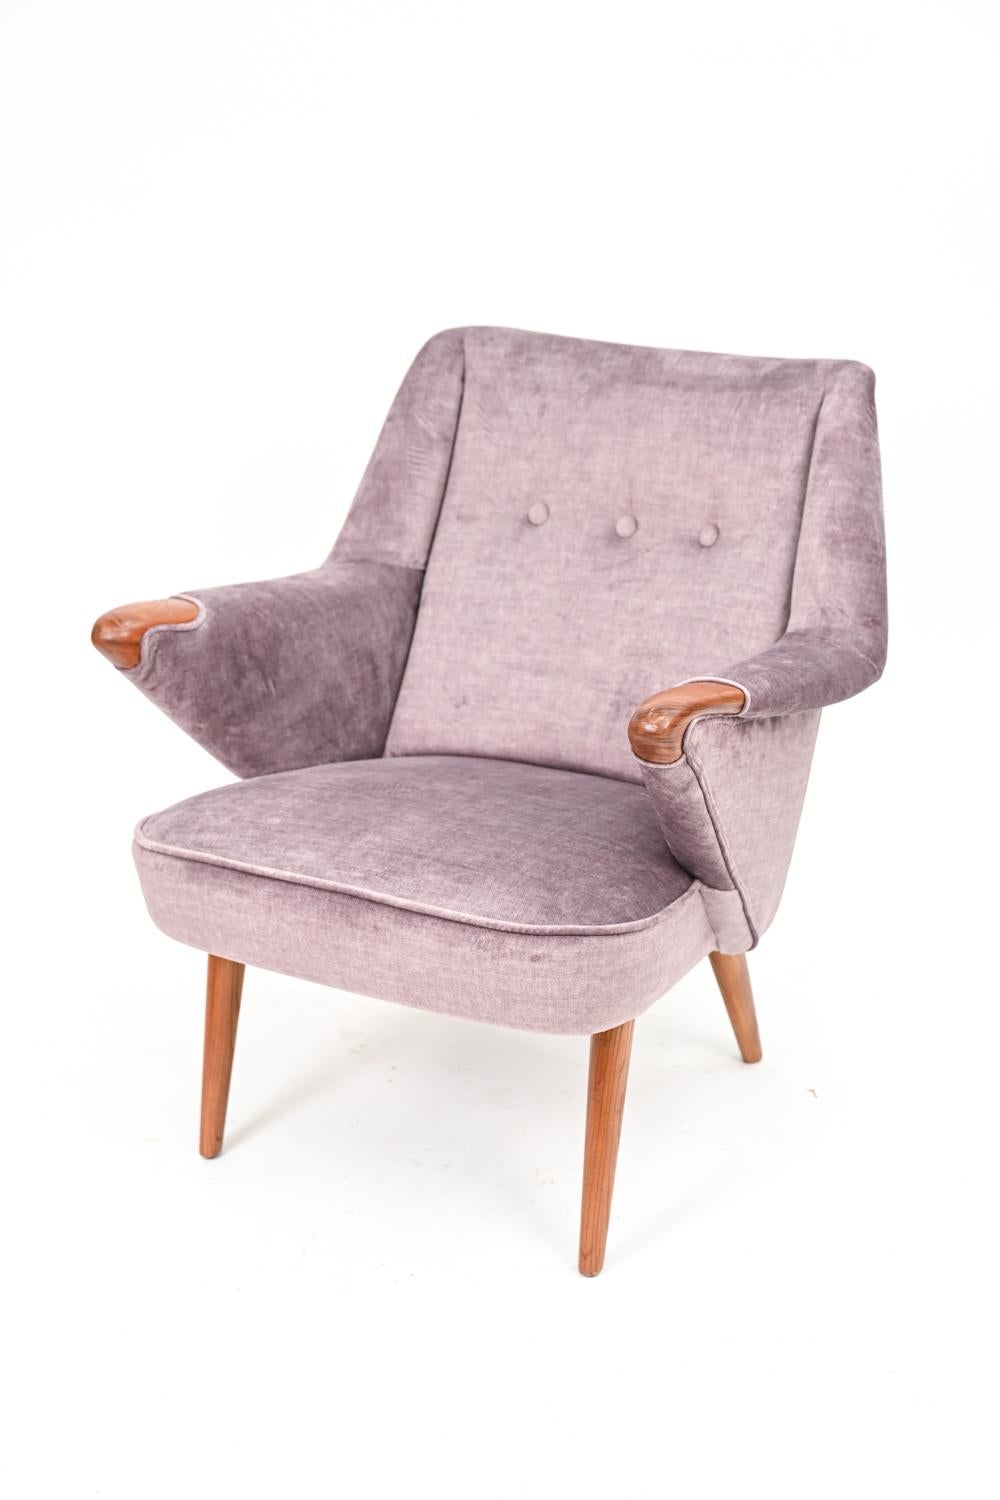 Mid-Century Modern Danish Mid-Century Sculptural Teak Lounge Chair